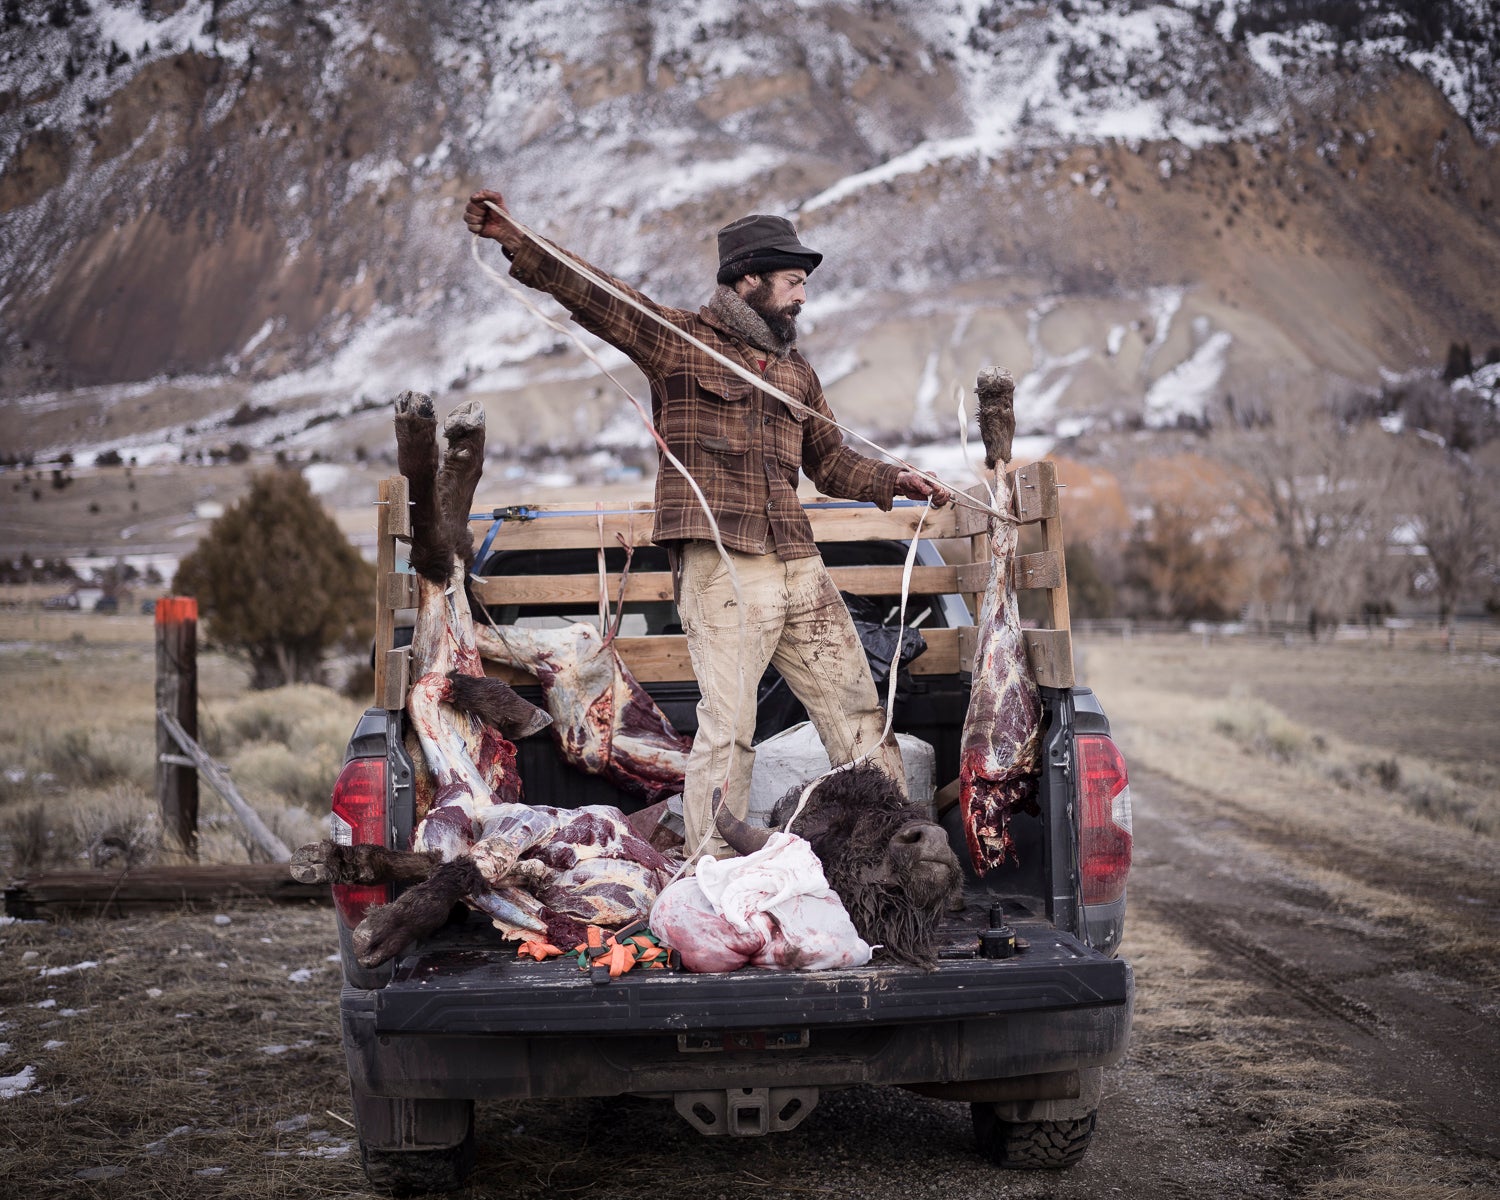 Josh loads buffalo quarters into a Native American hunter's truck